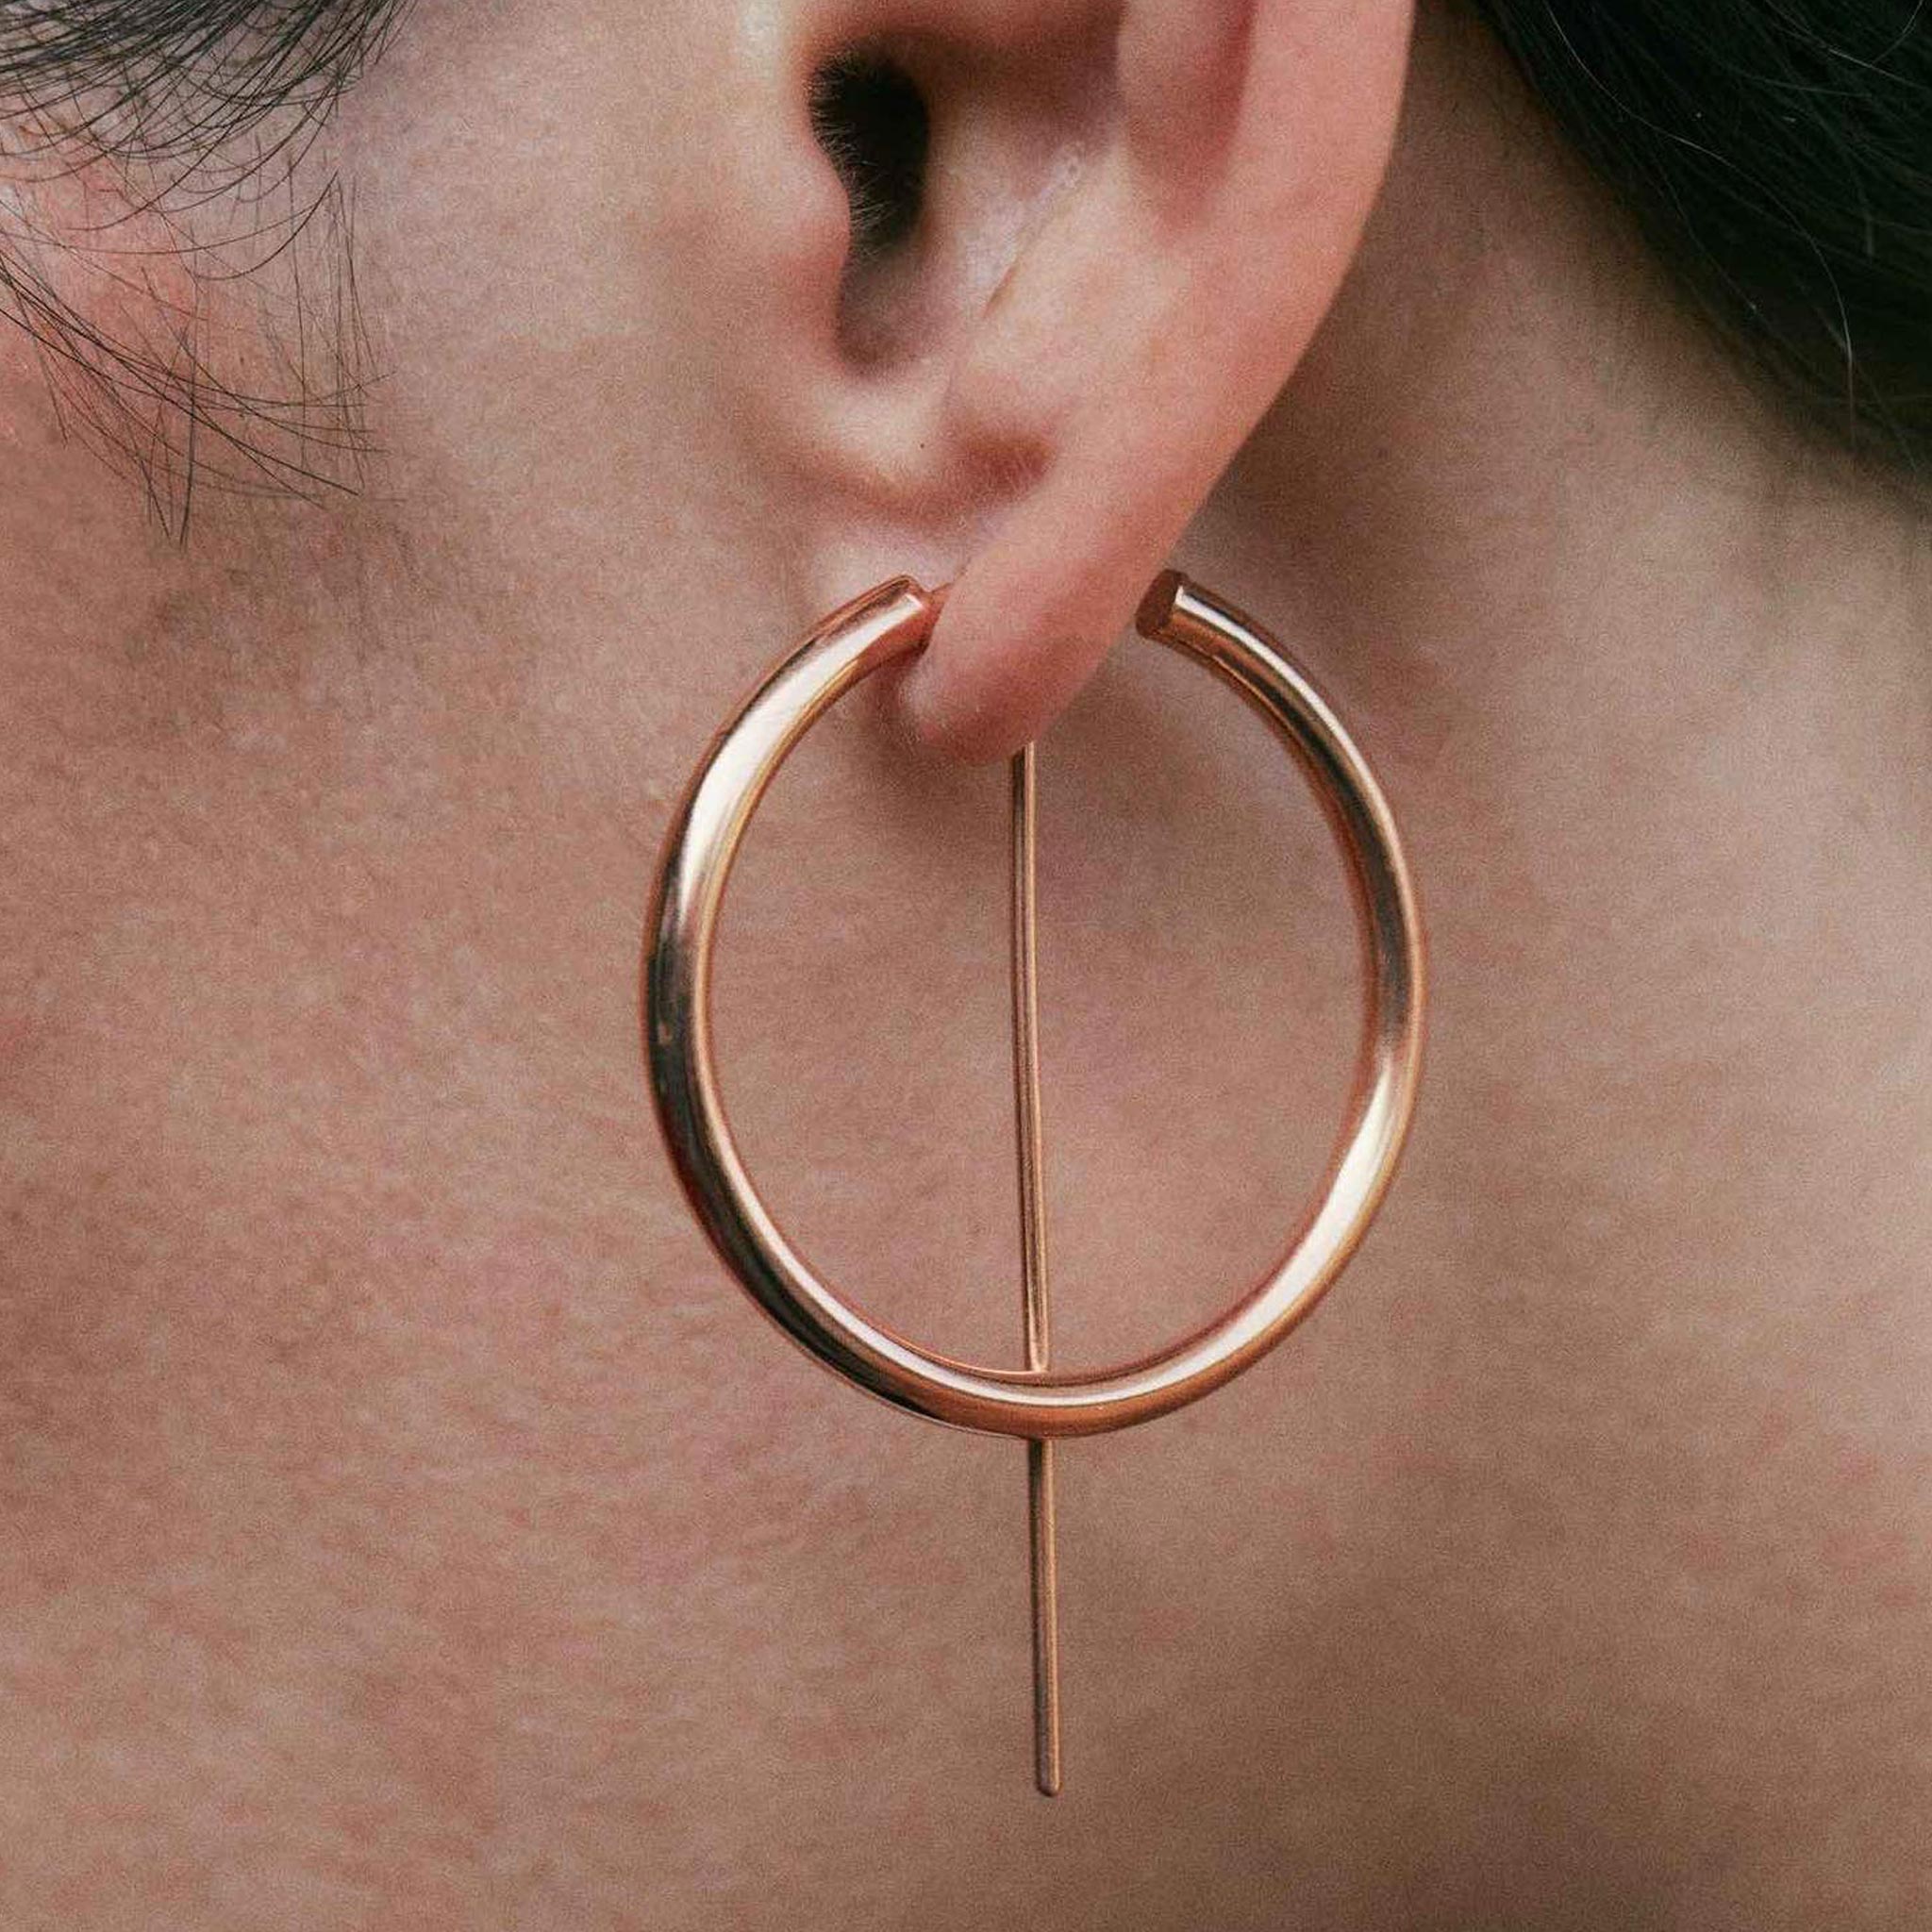 Jaclyn Moran Jewelry - Hoop & Post Earrings in Rose Gold, pictured on model.